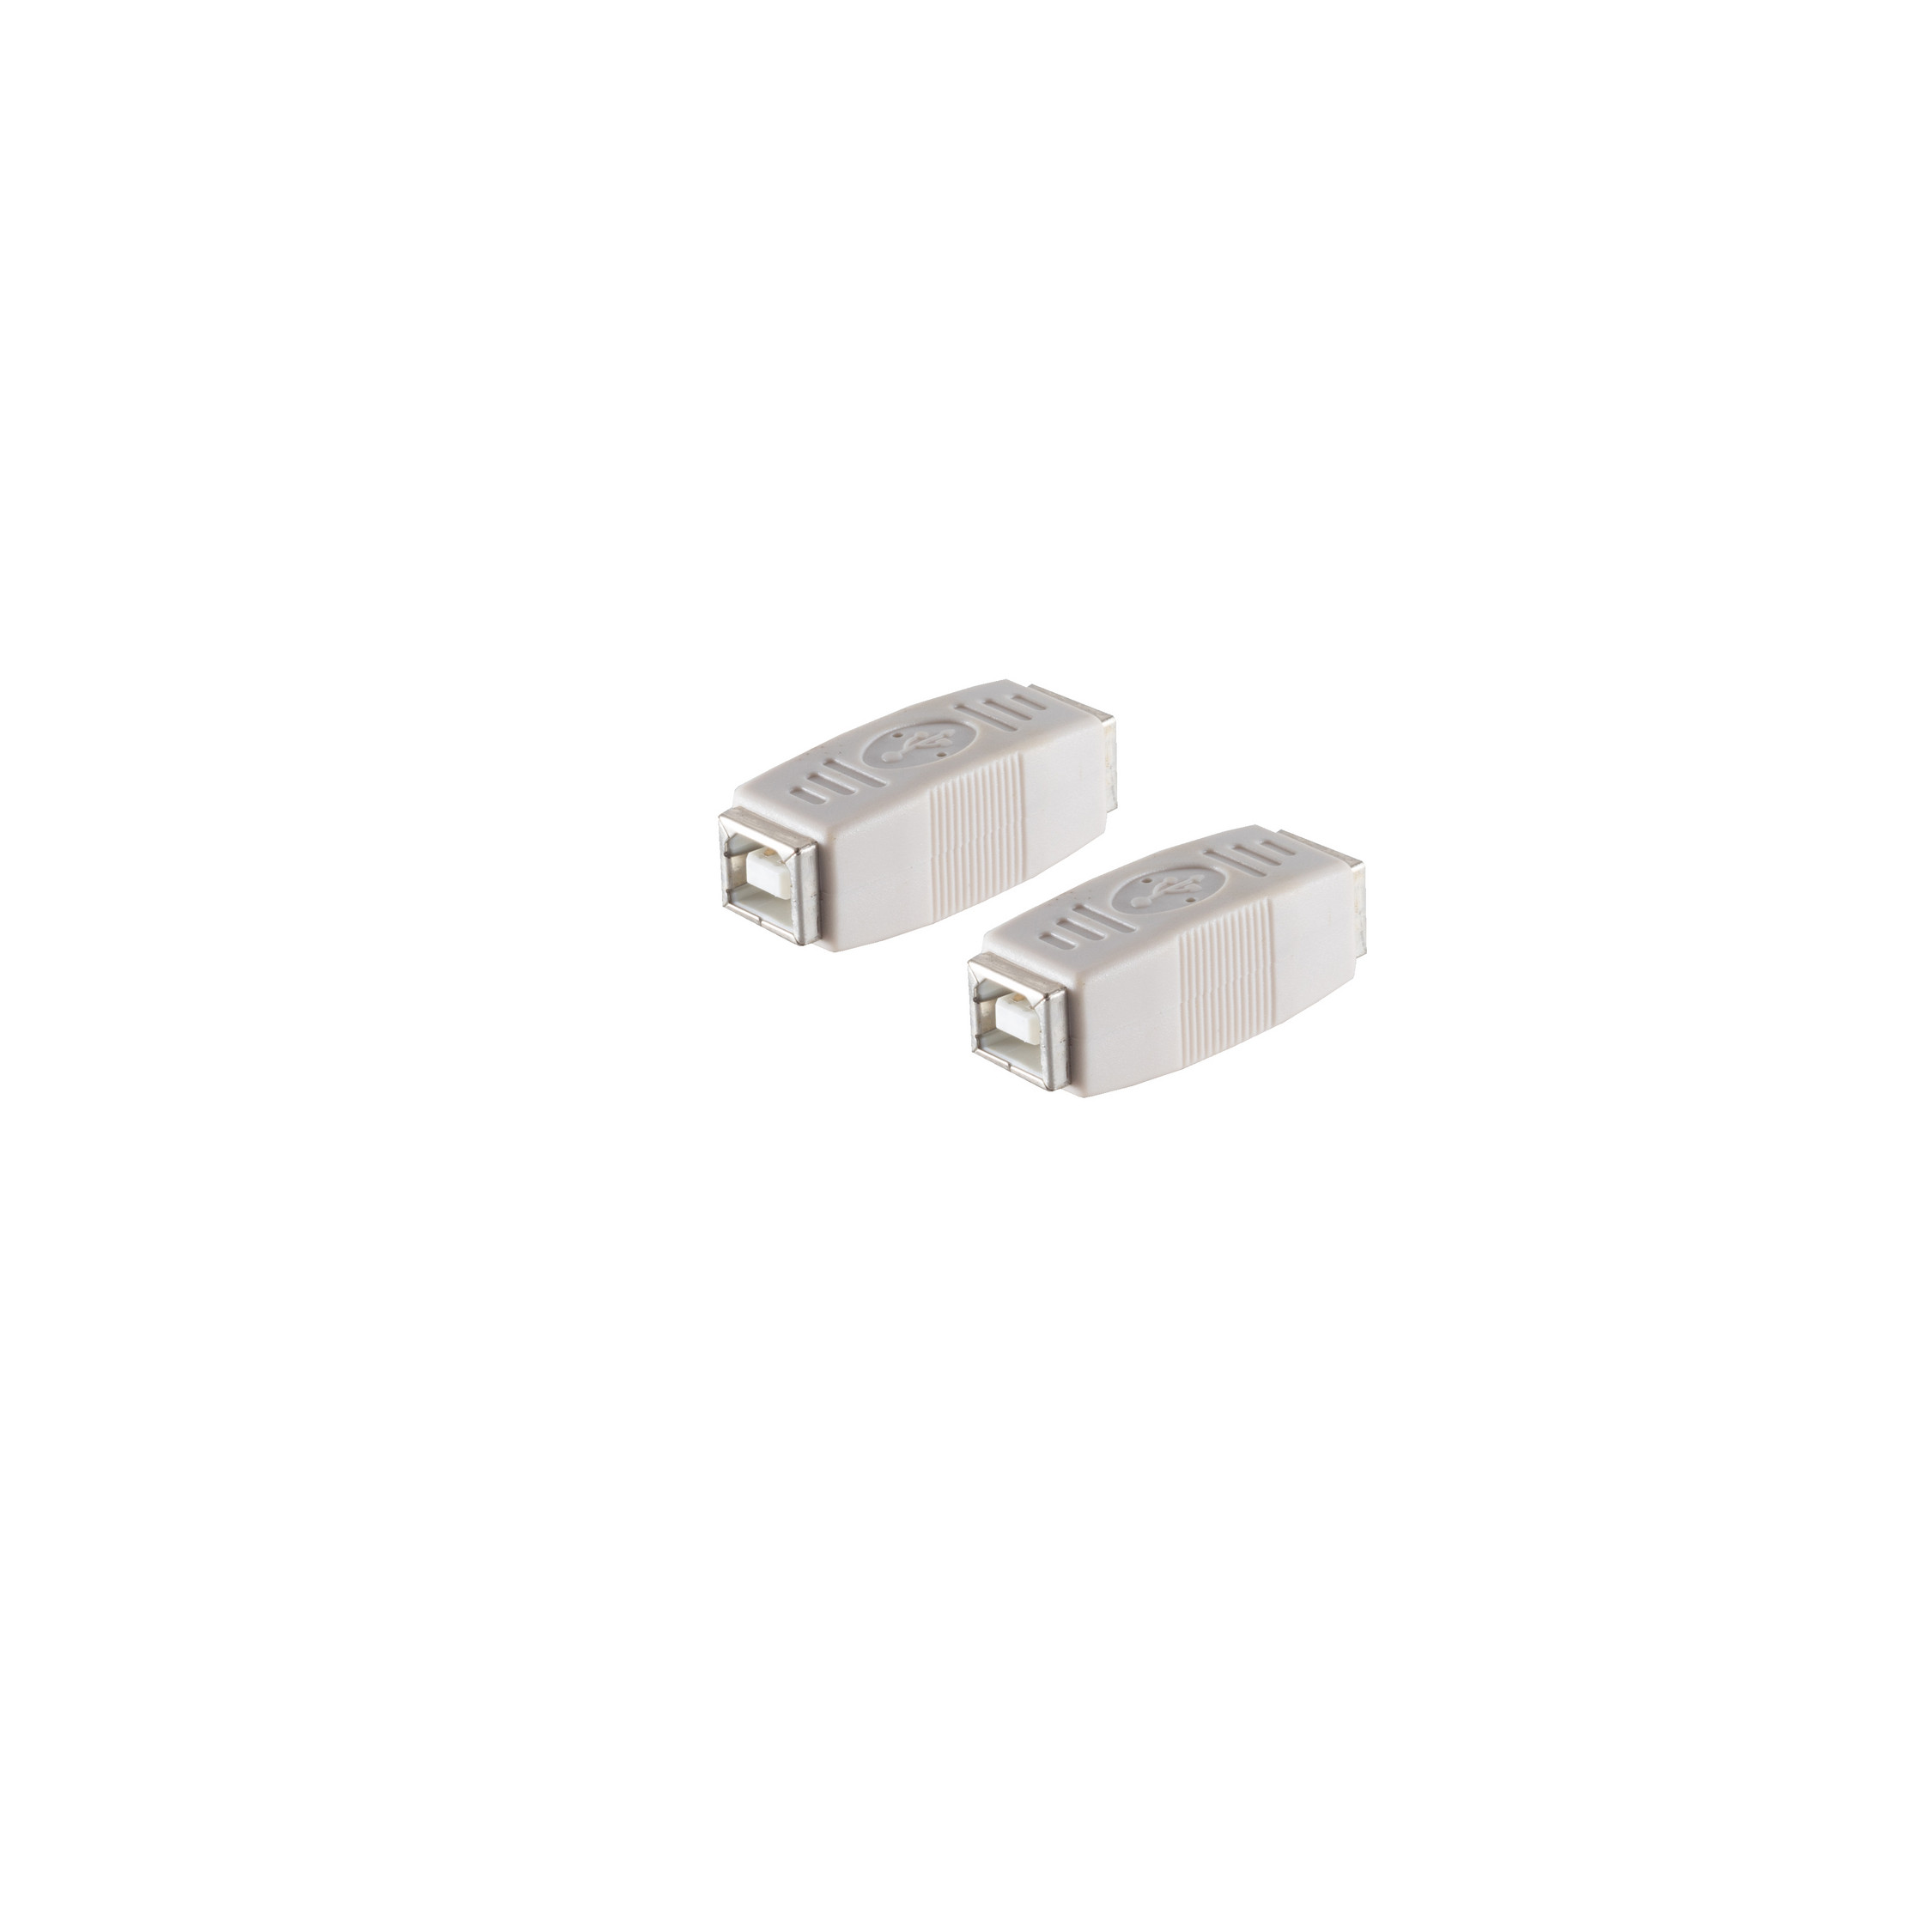 USB B SHIVERPEAKS Adapter / USB 2.0 Kupplung B Kupplung Adapter, grau